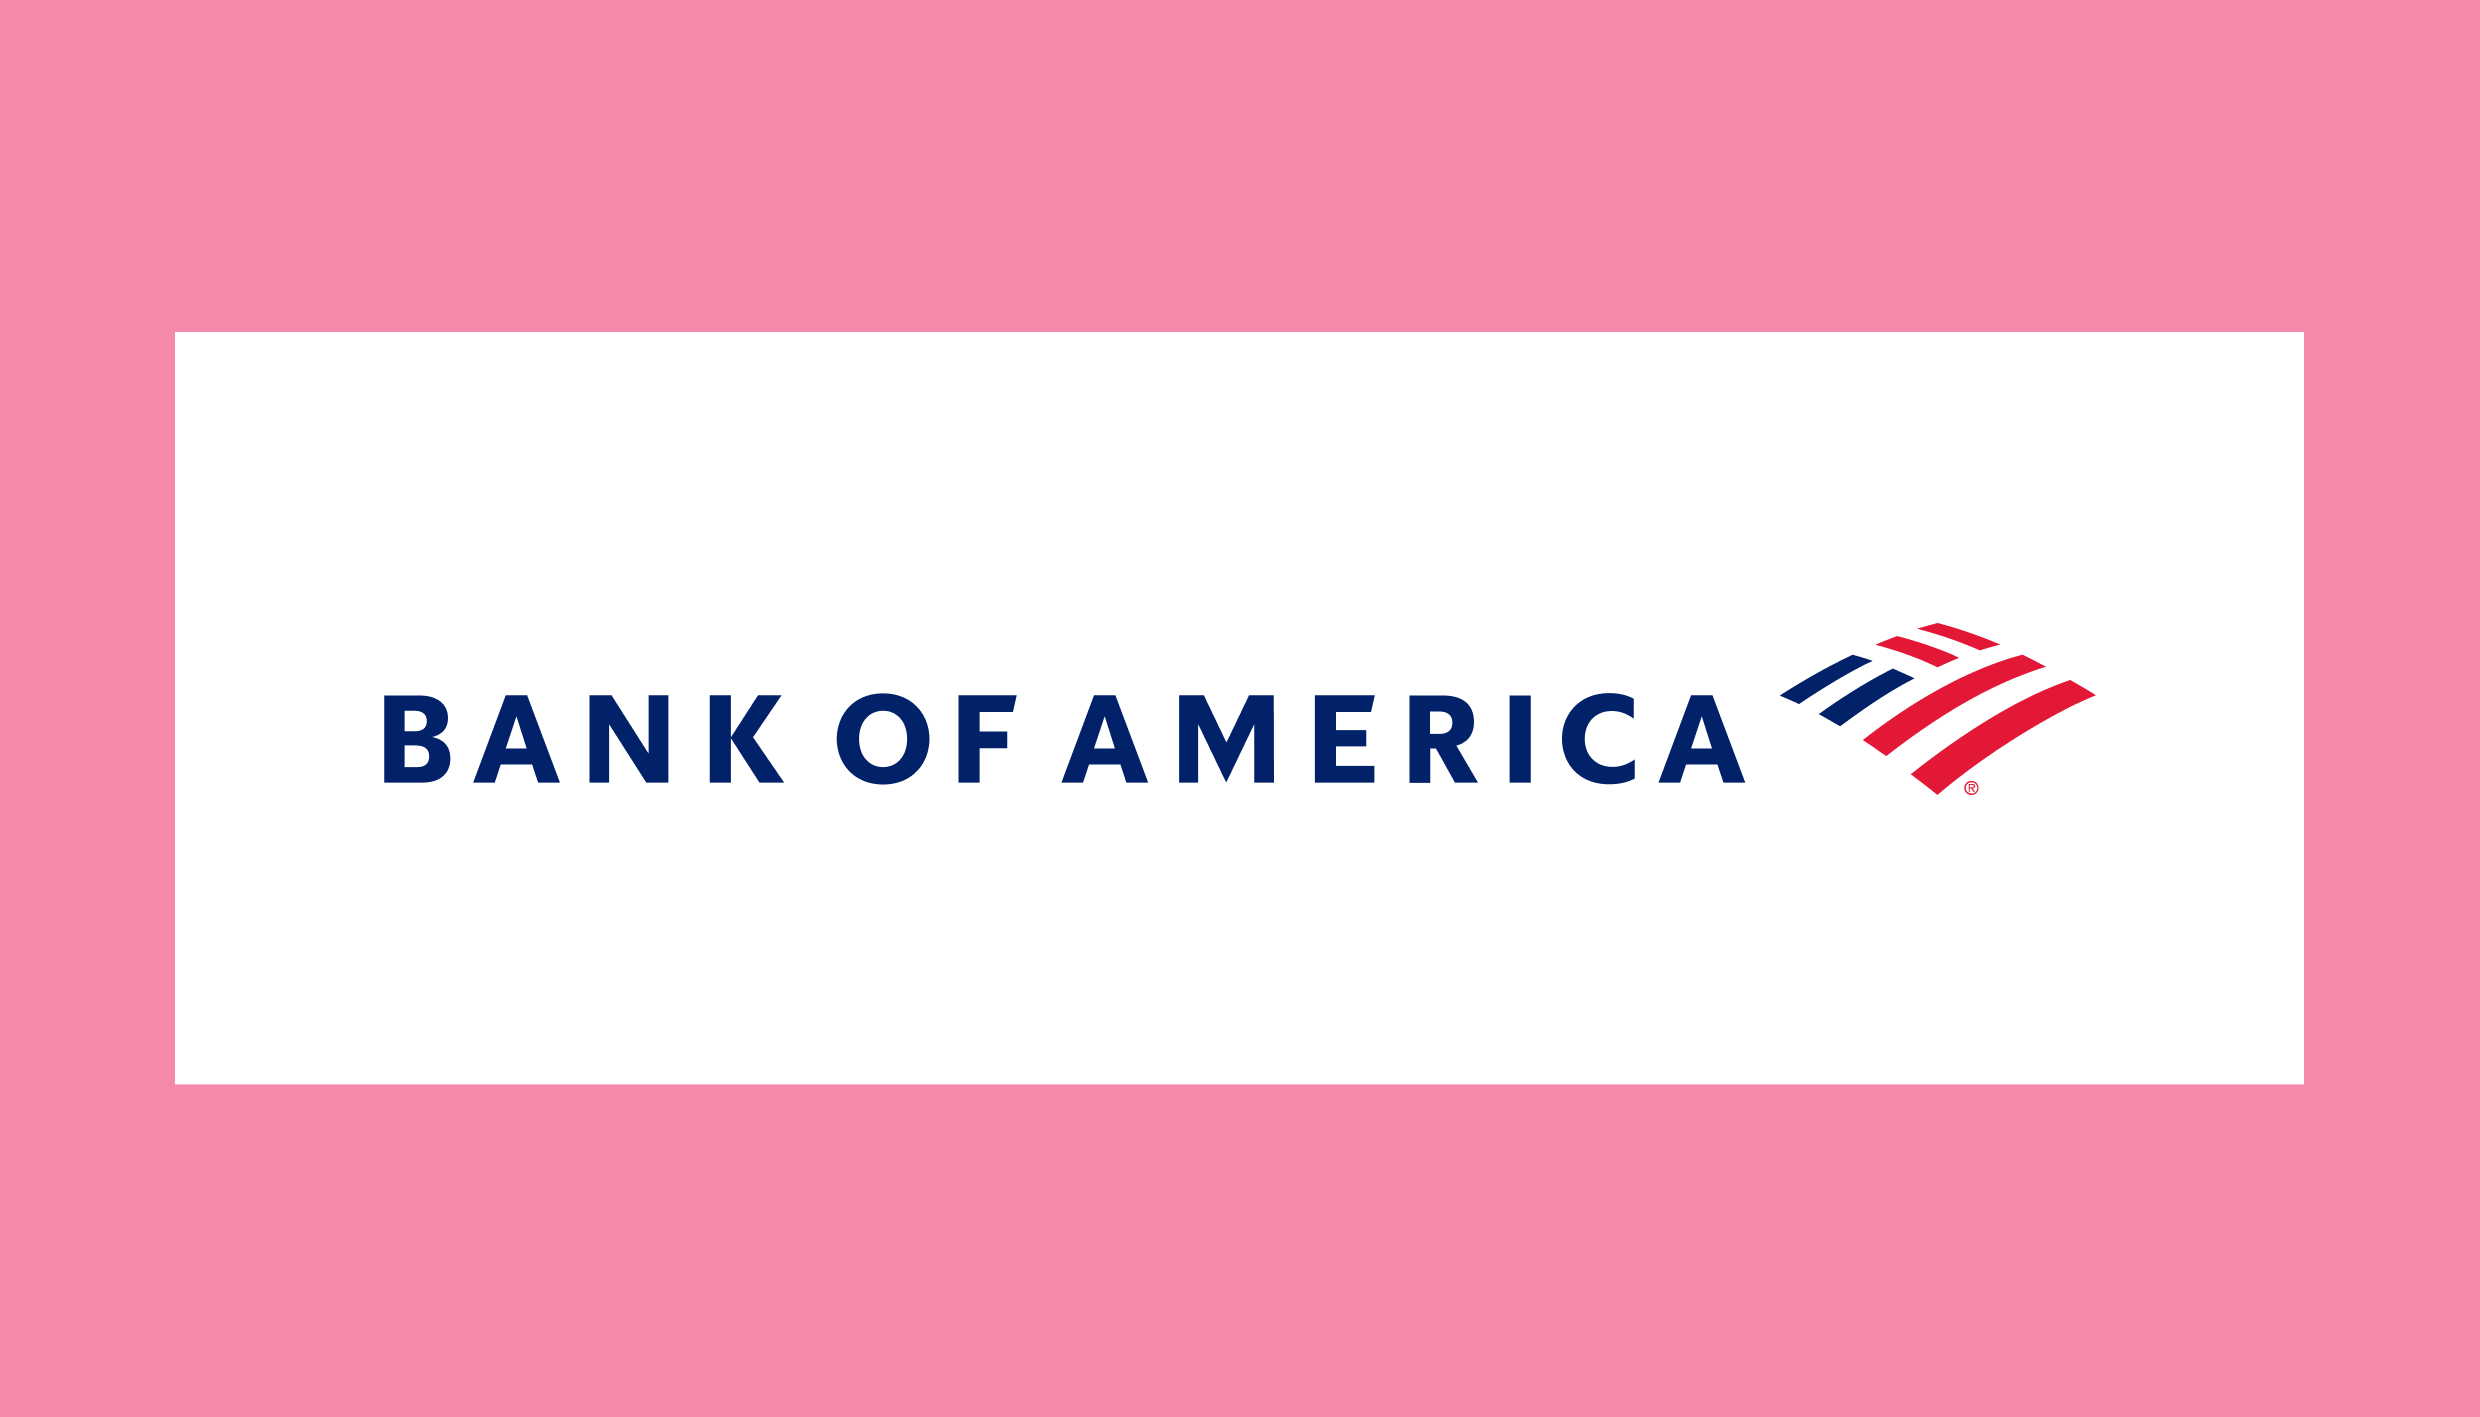 Bank of America Advantage Banking